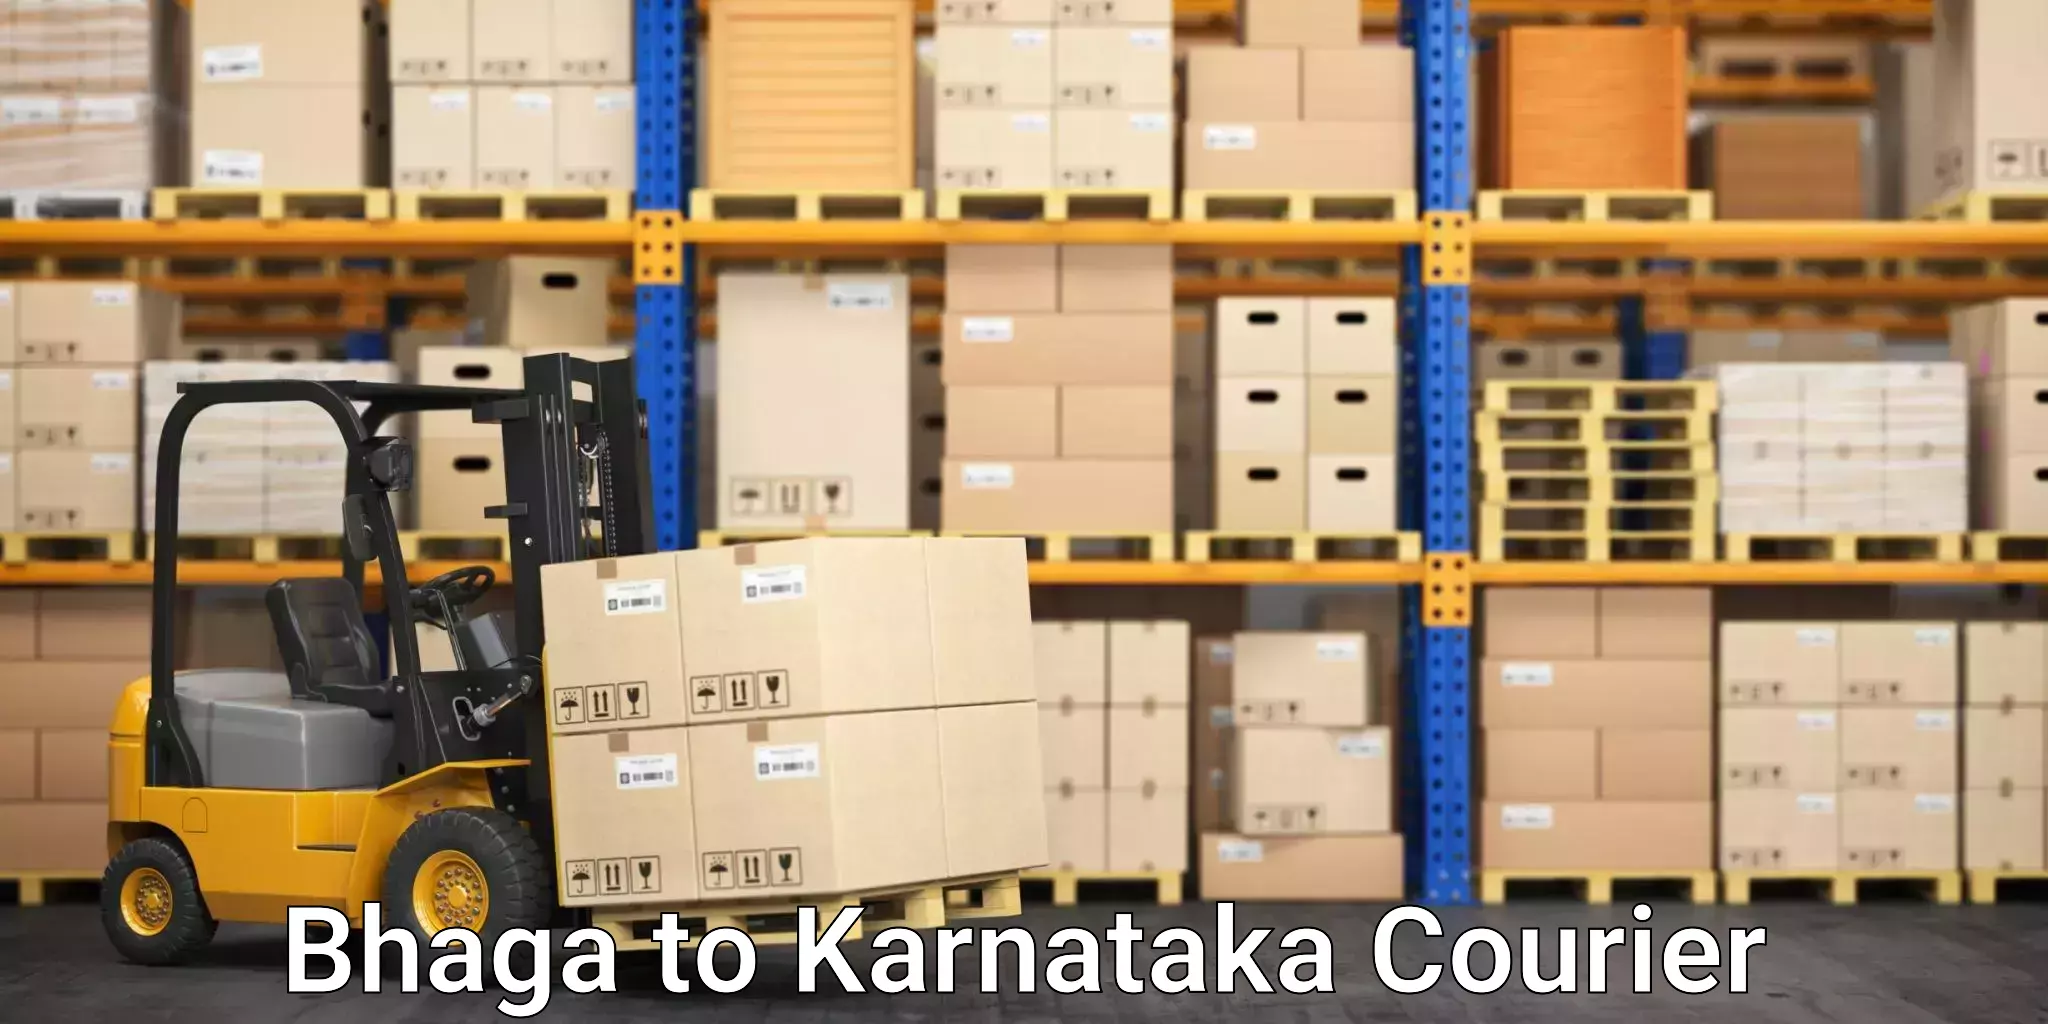 High-speed parcel service Bhaga to Kalaburagi